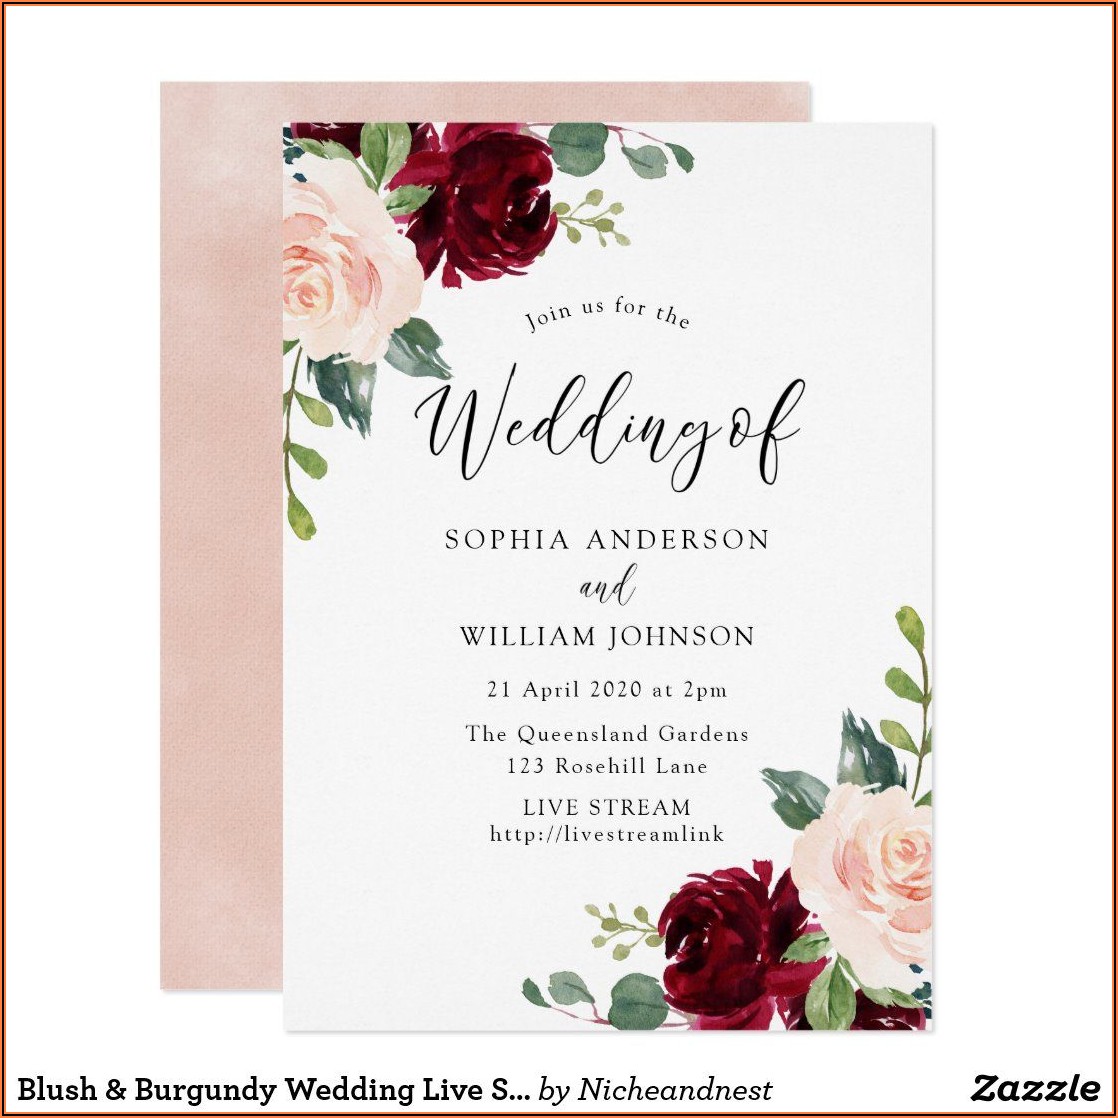 Zazzle Wedding Invitations Reviews